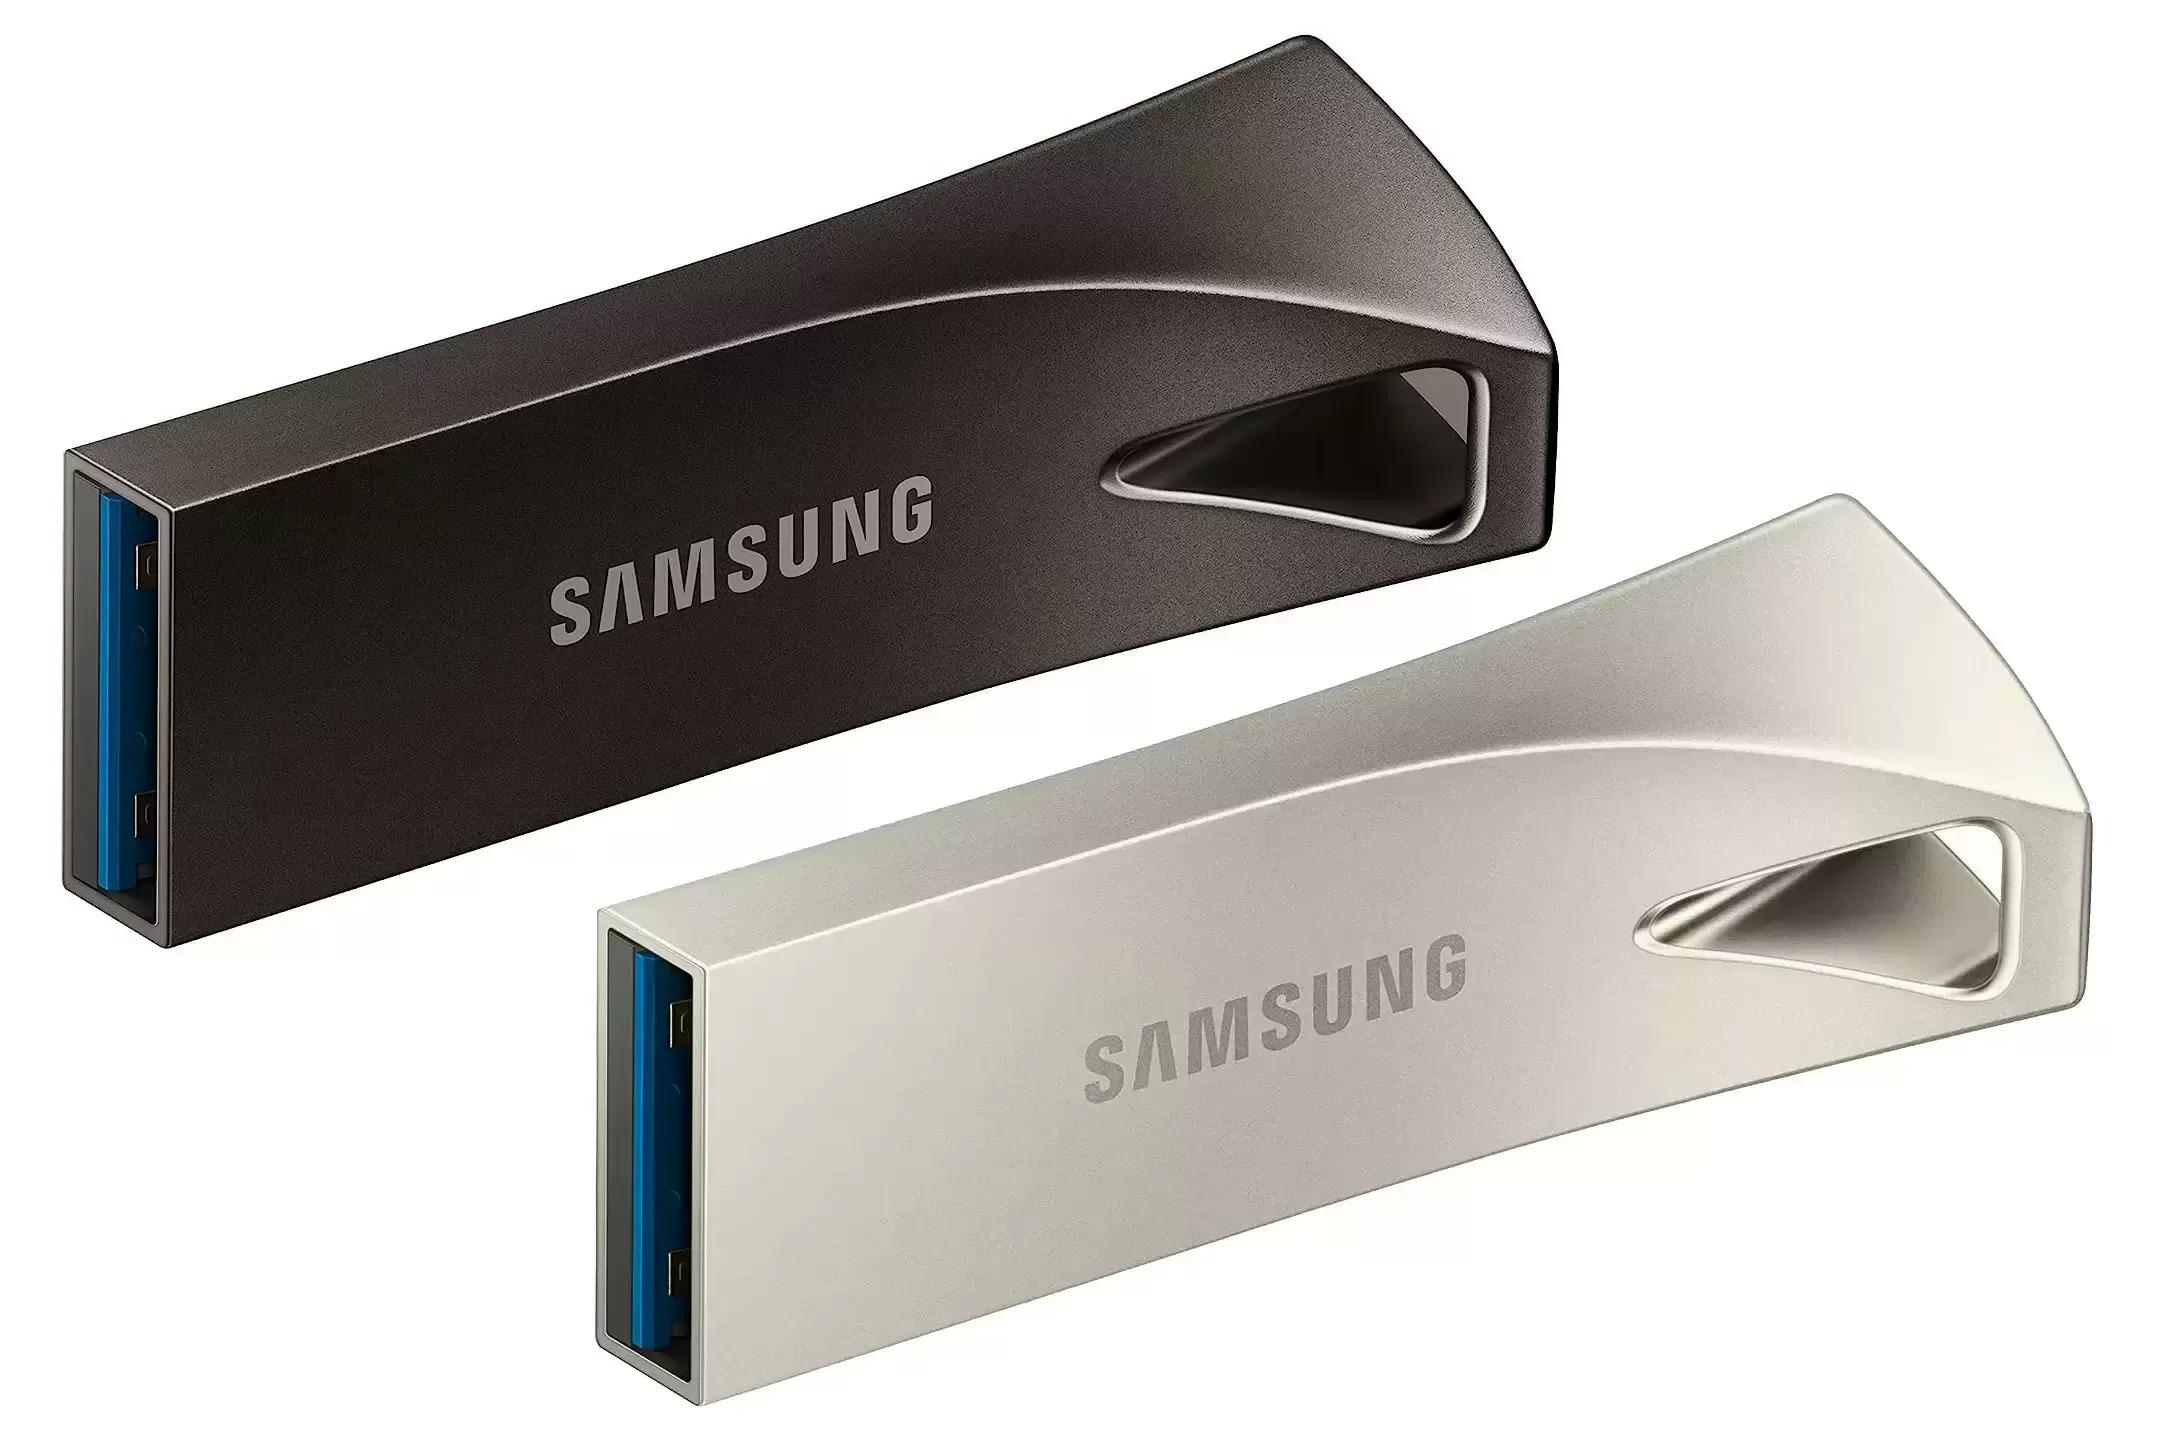 256GB Samsung BAR Plus USB 3.1 Flash Drive for $19.99